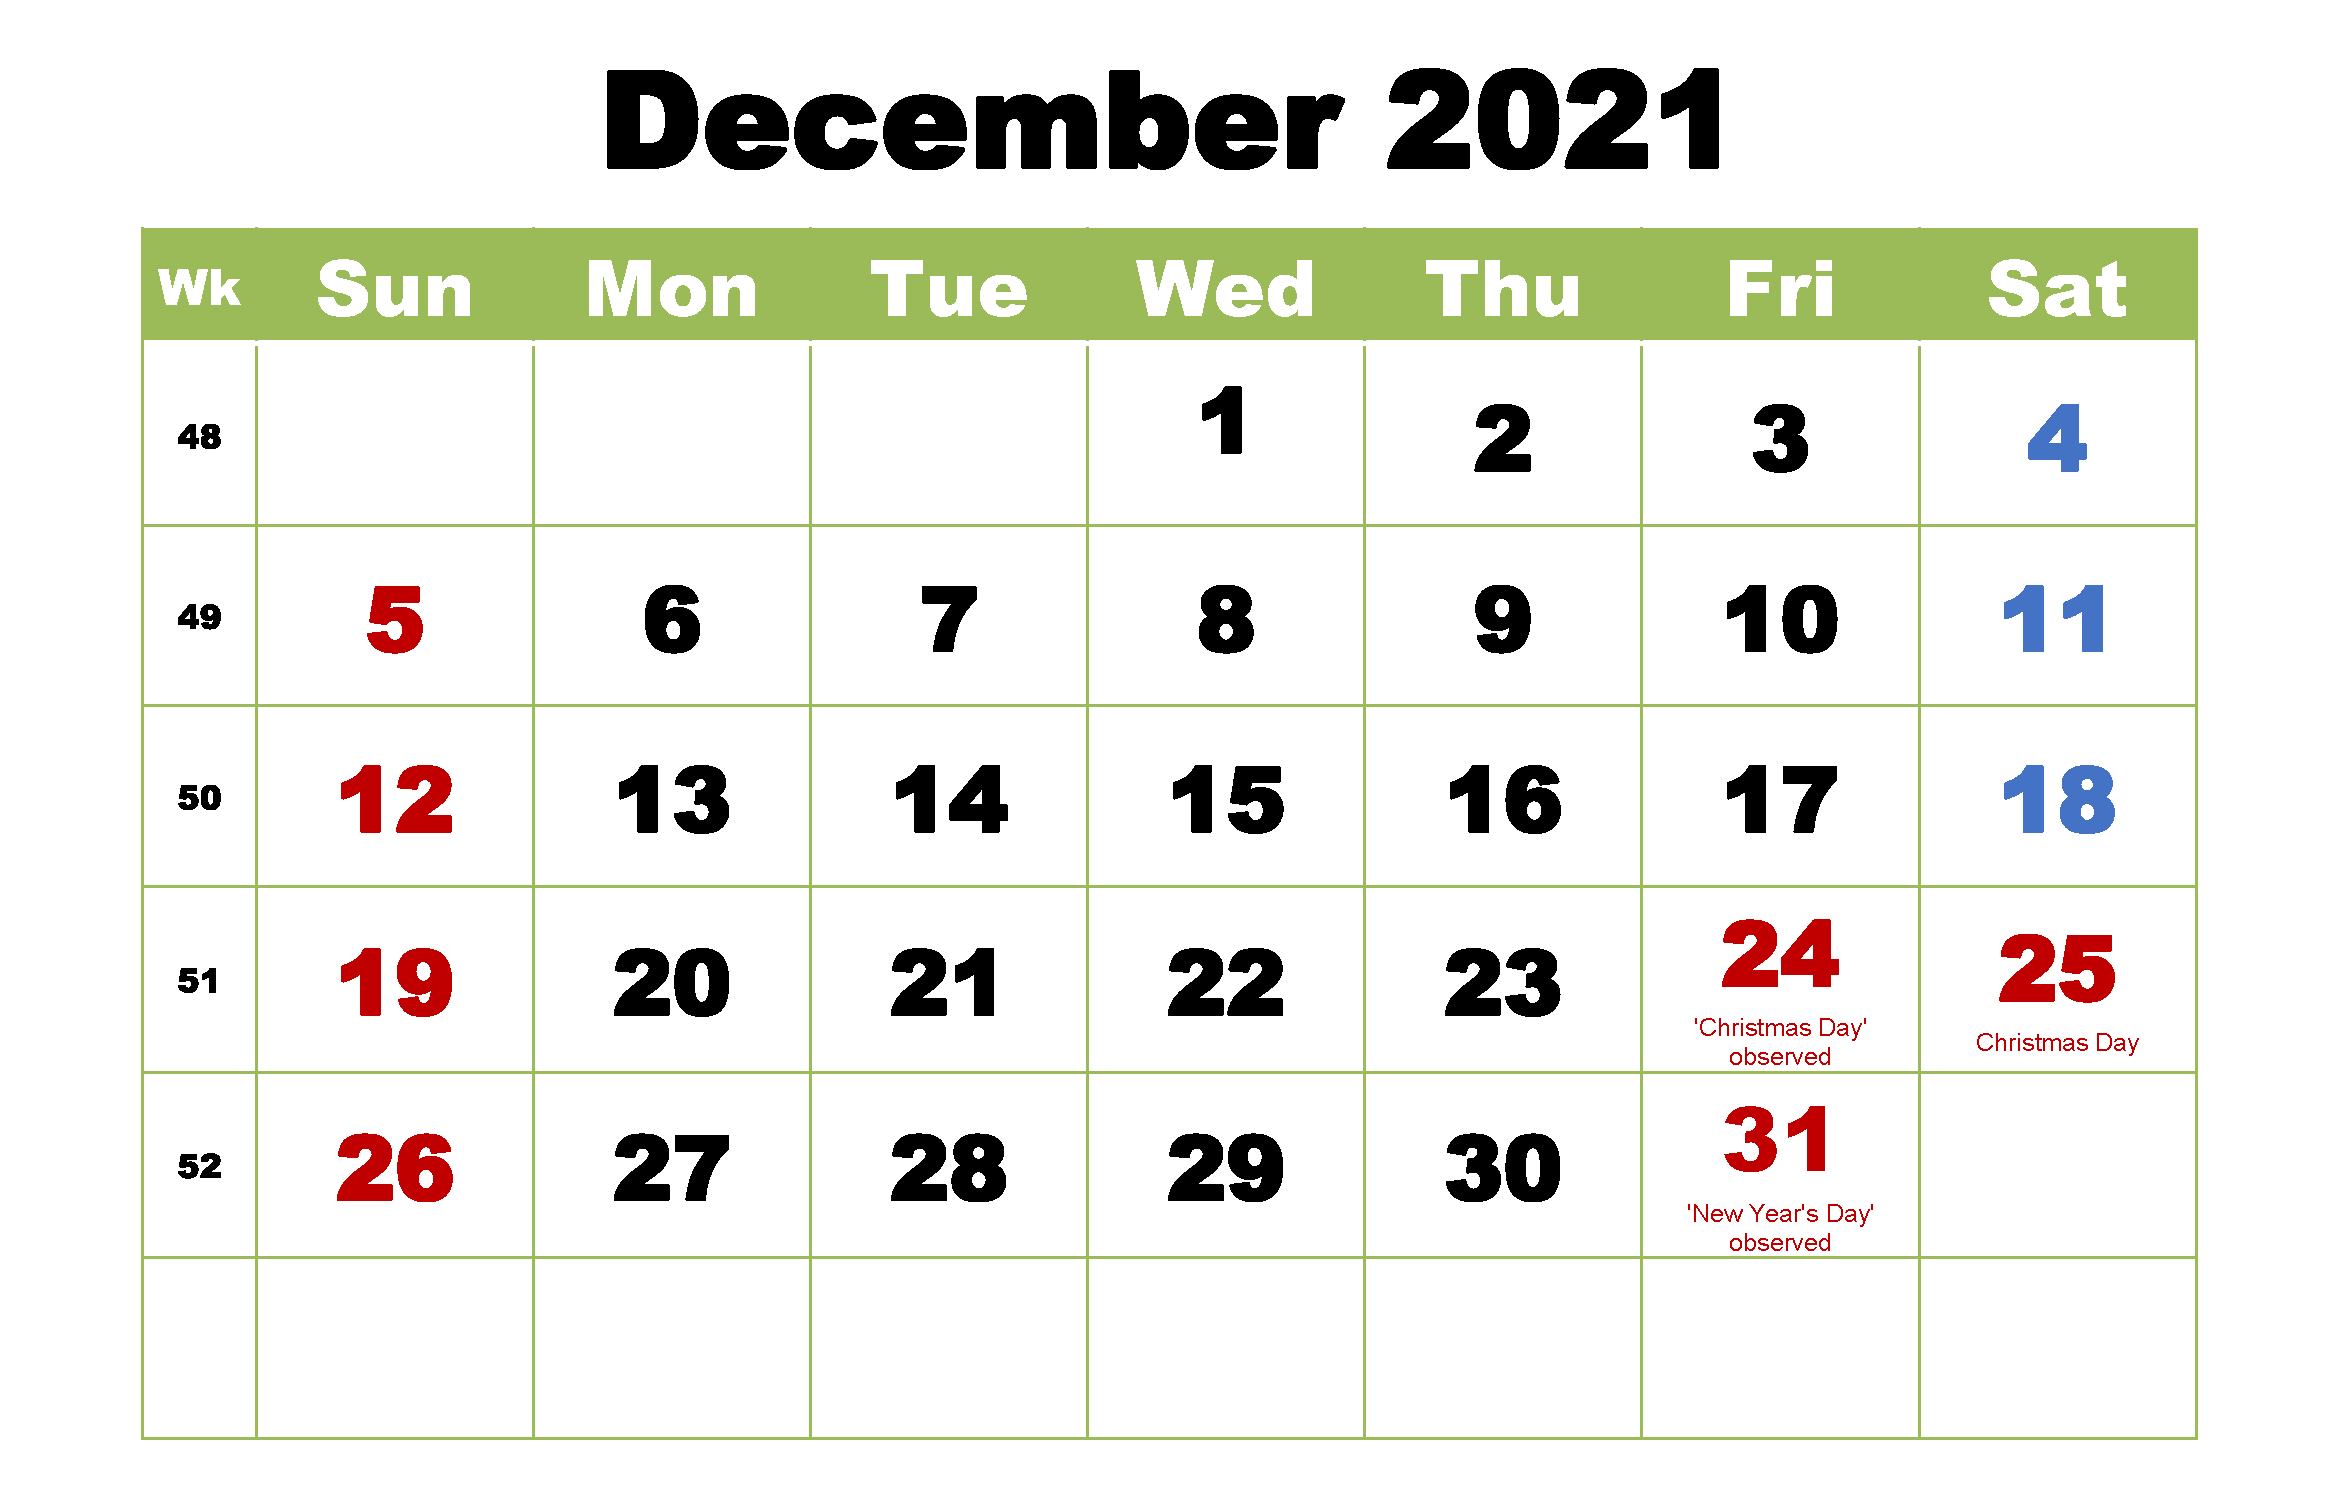 December 2021 Holidays Calendar